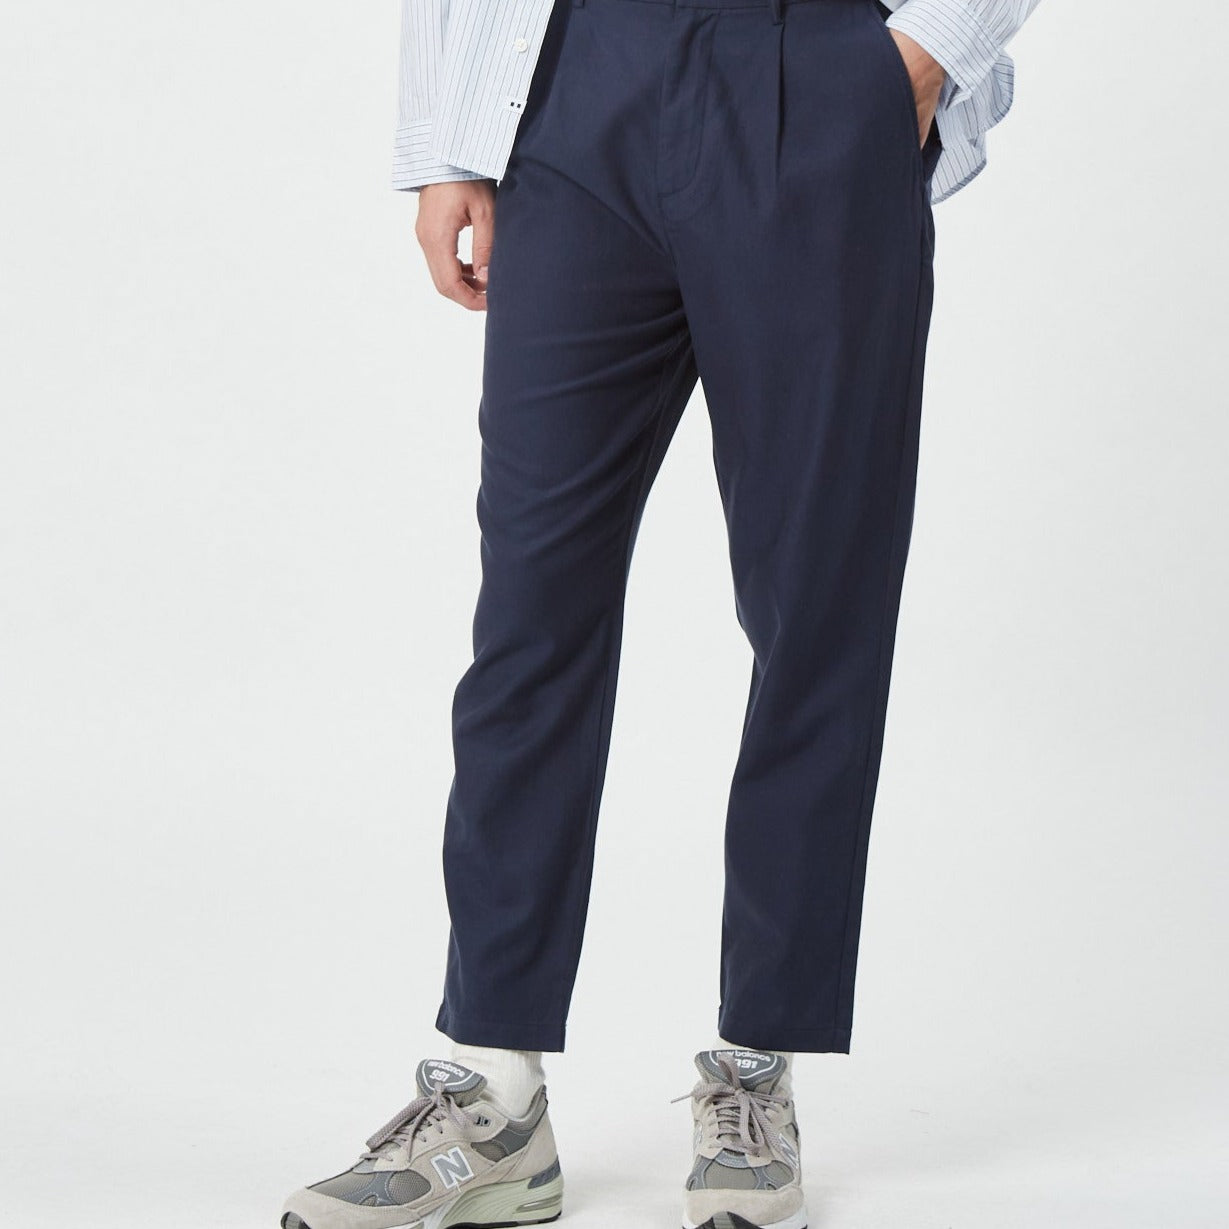 boutique-the-rrom-minimum-homme-pantalon-chino-coton-tencel-navy